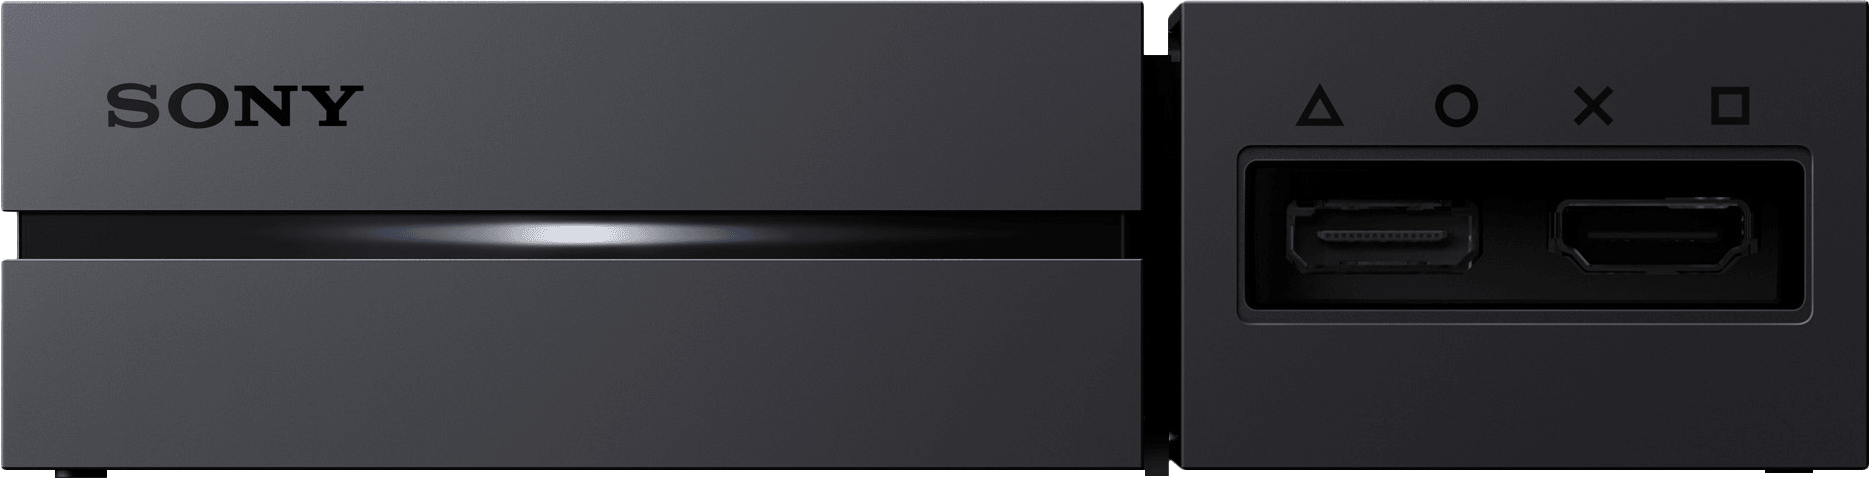 PlayStation VR Headset Processor Unit v1 (PS4) | PlayStation 4